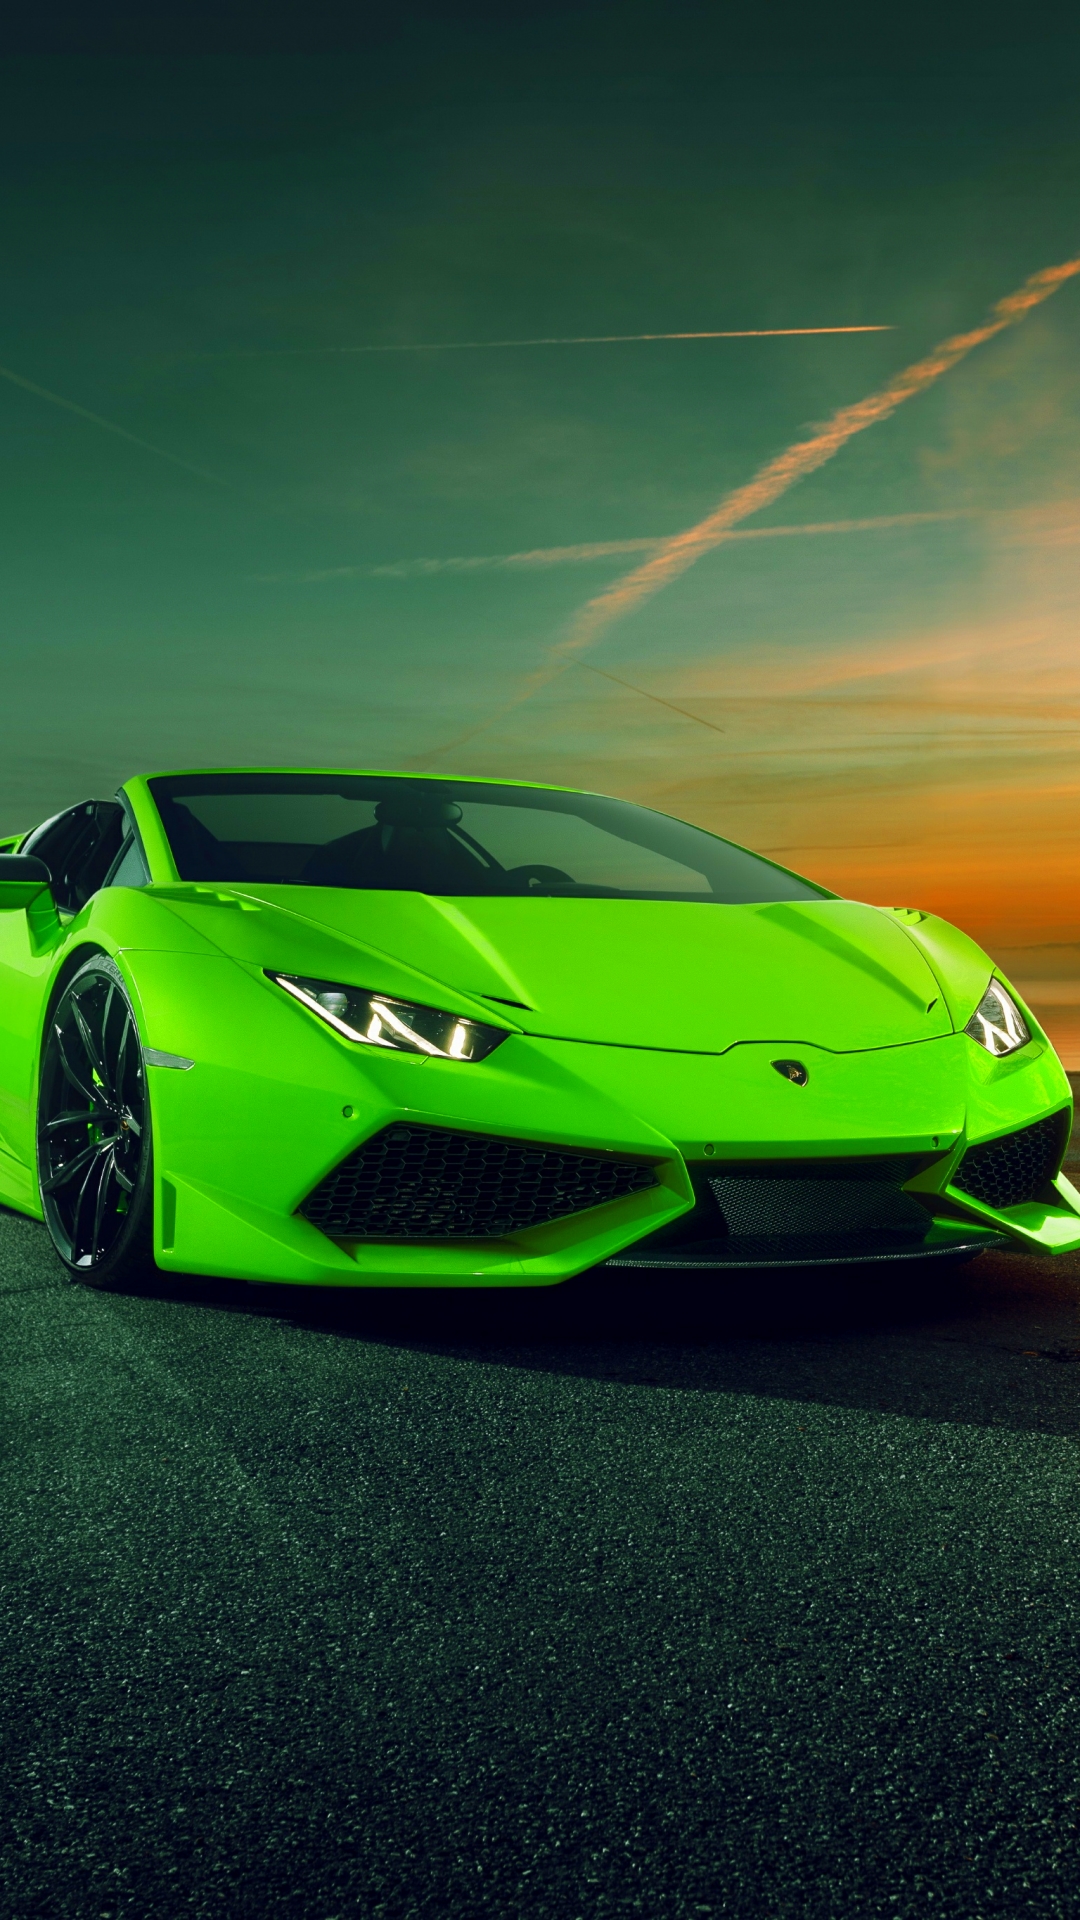 Green Lamborghini Wallpaper Hd For Mobile